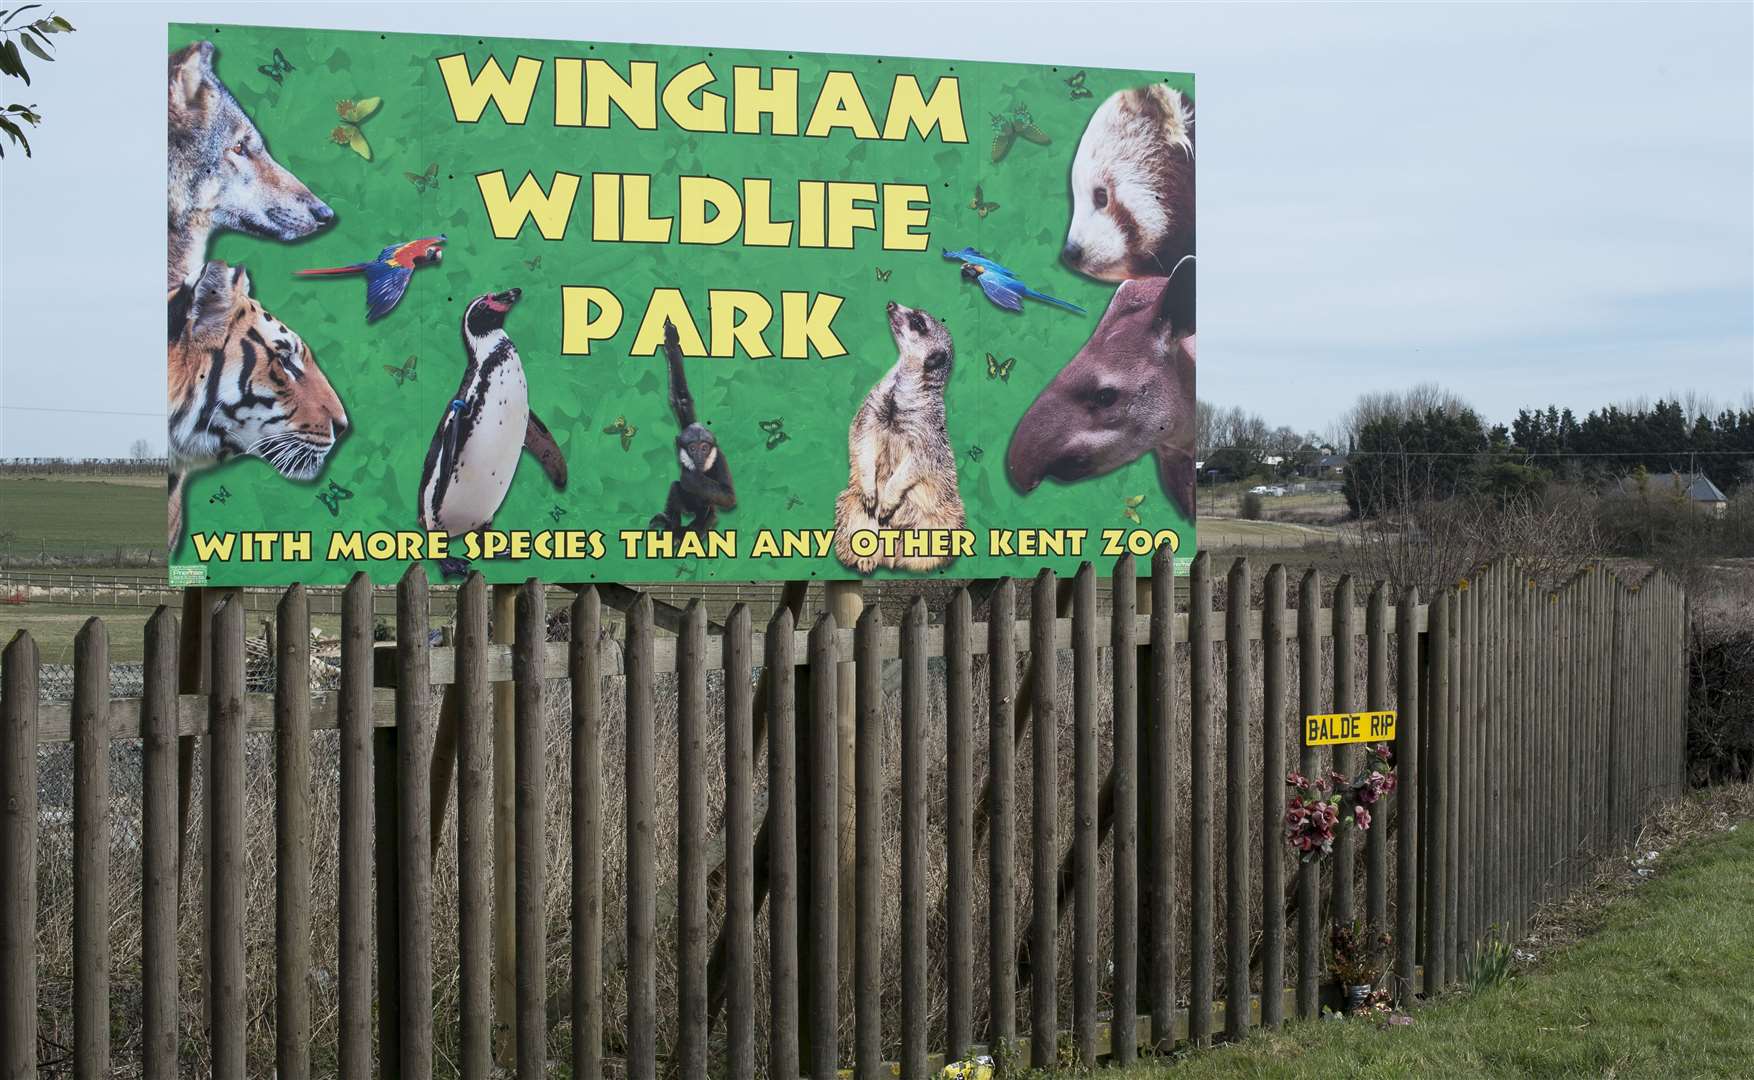 Wingham Wildlife Park will close today